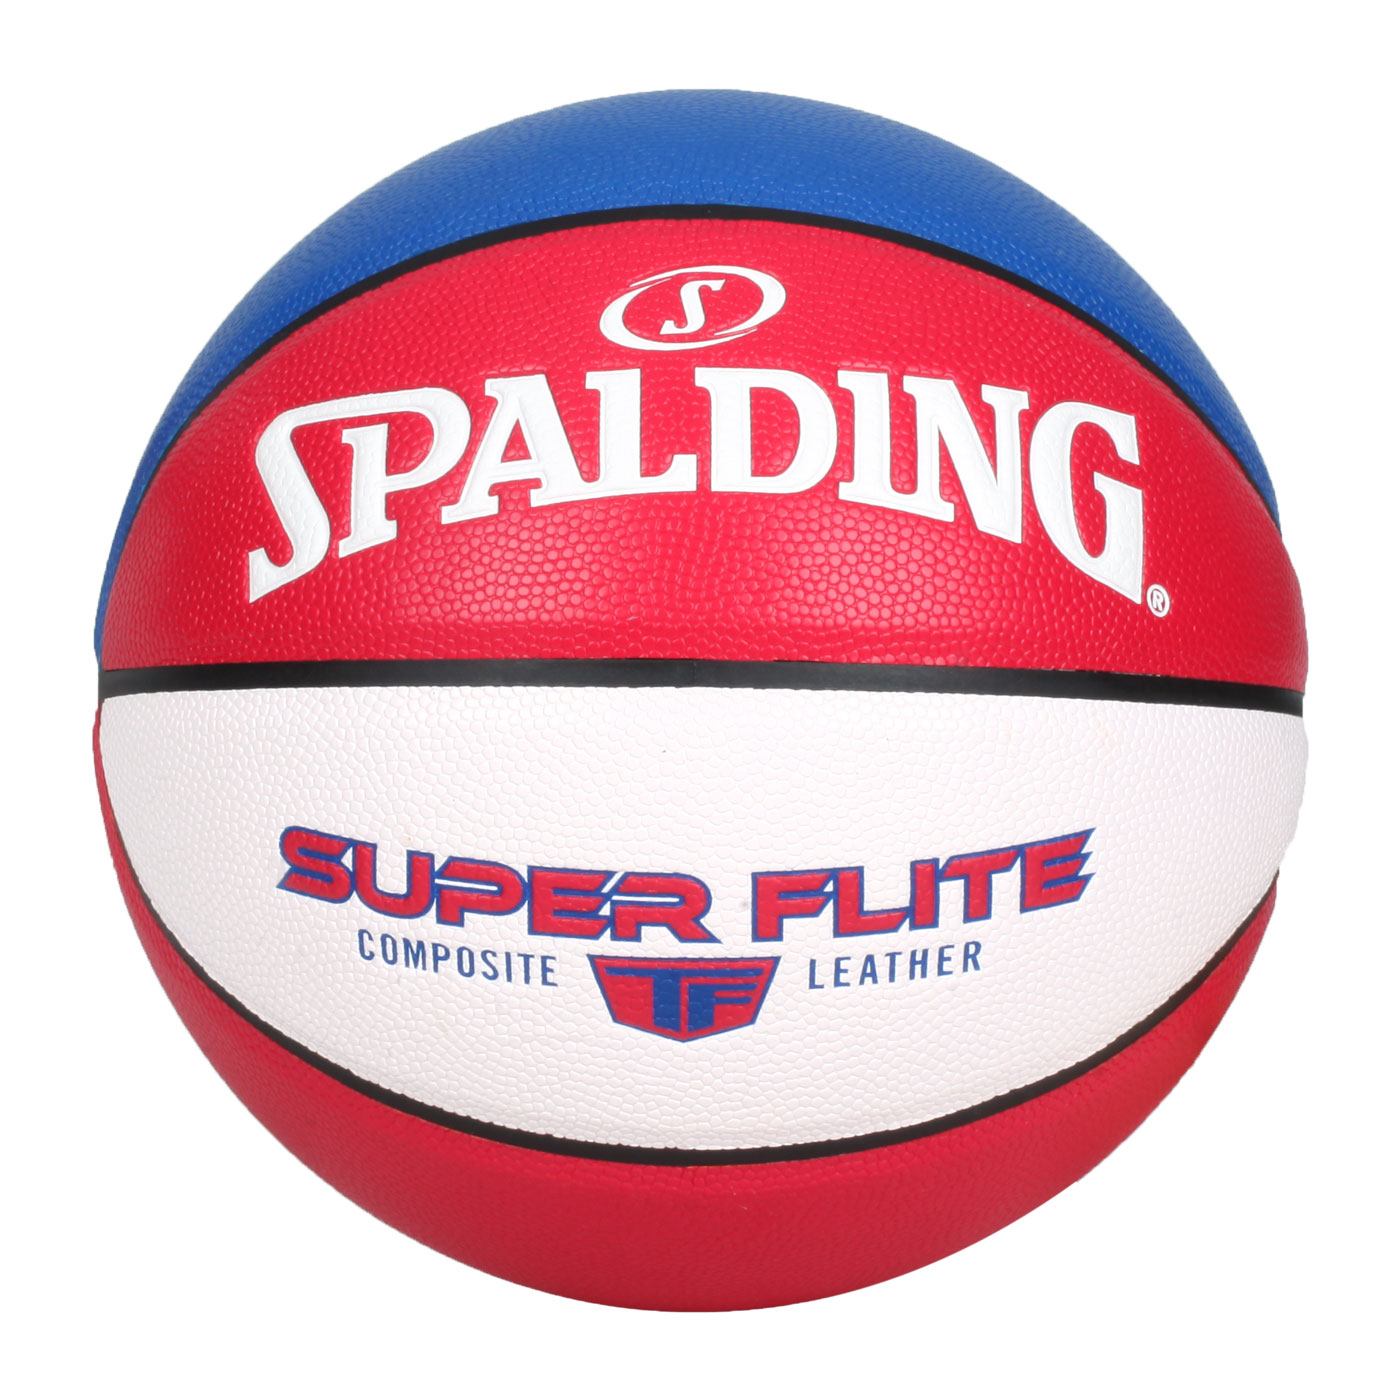 SPALDING Super Flite #7合成皮籃球#40602 SPA76928 - 紅白藍